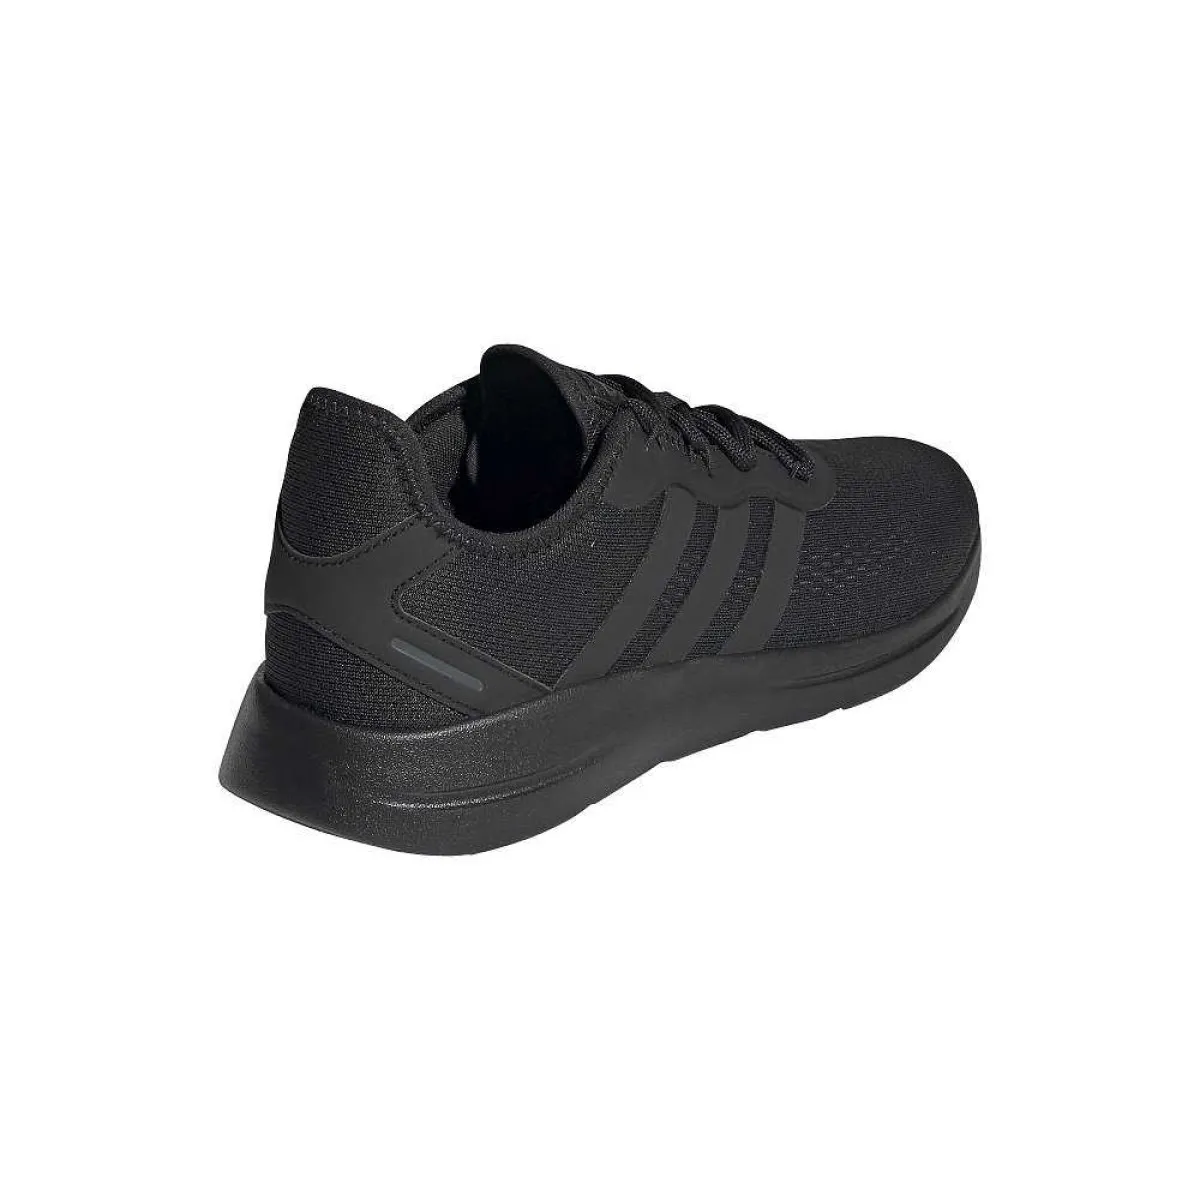 adidas sports shoes Lite Racer black